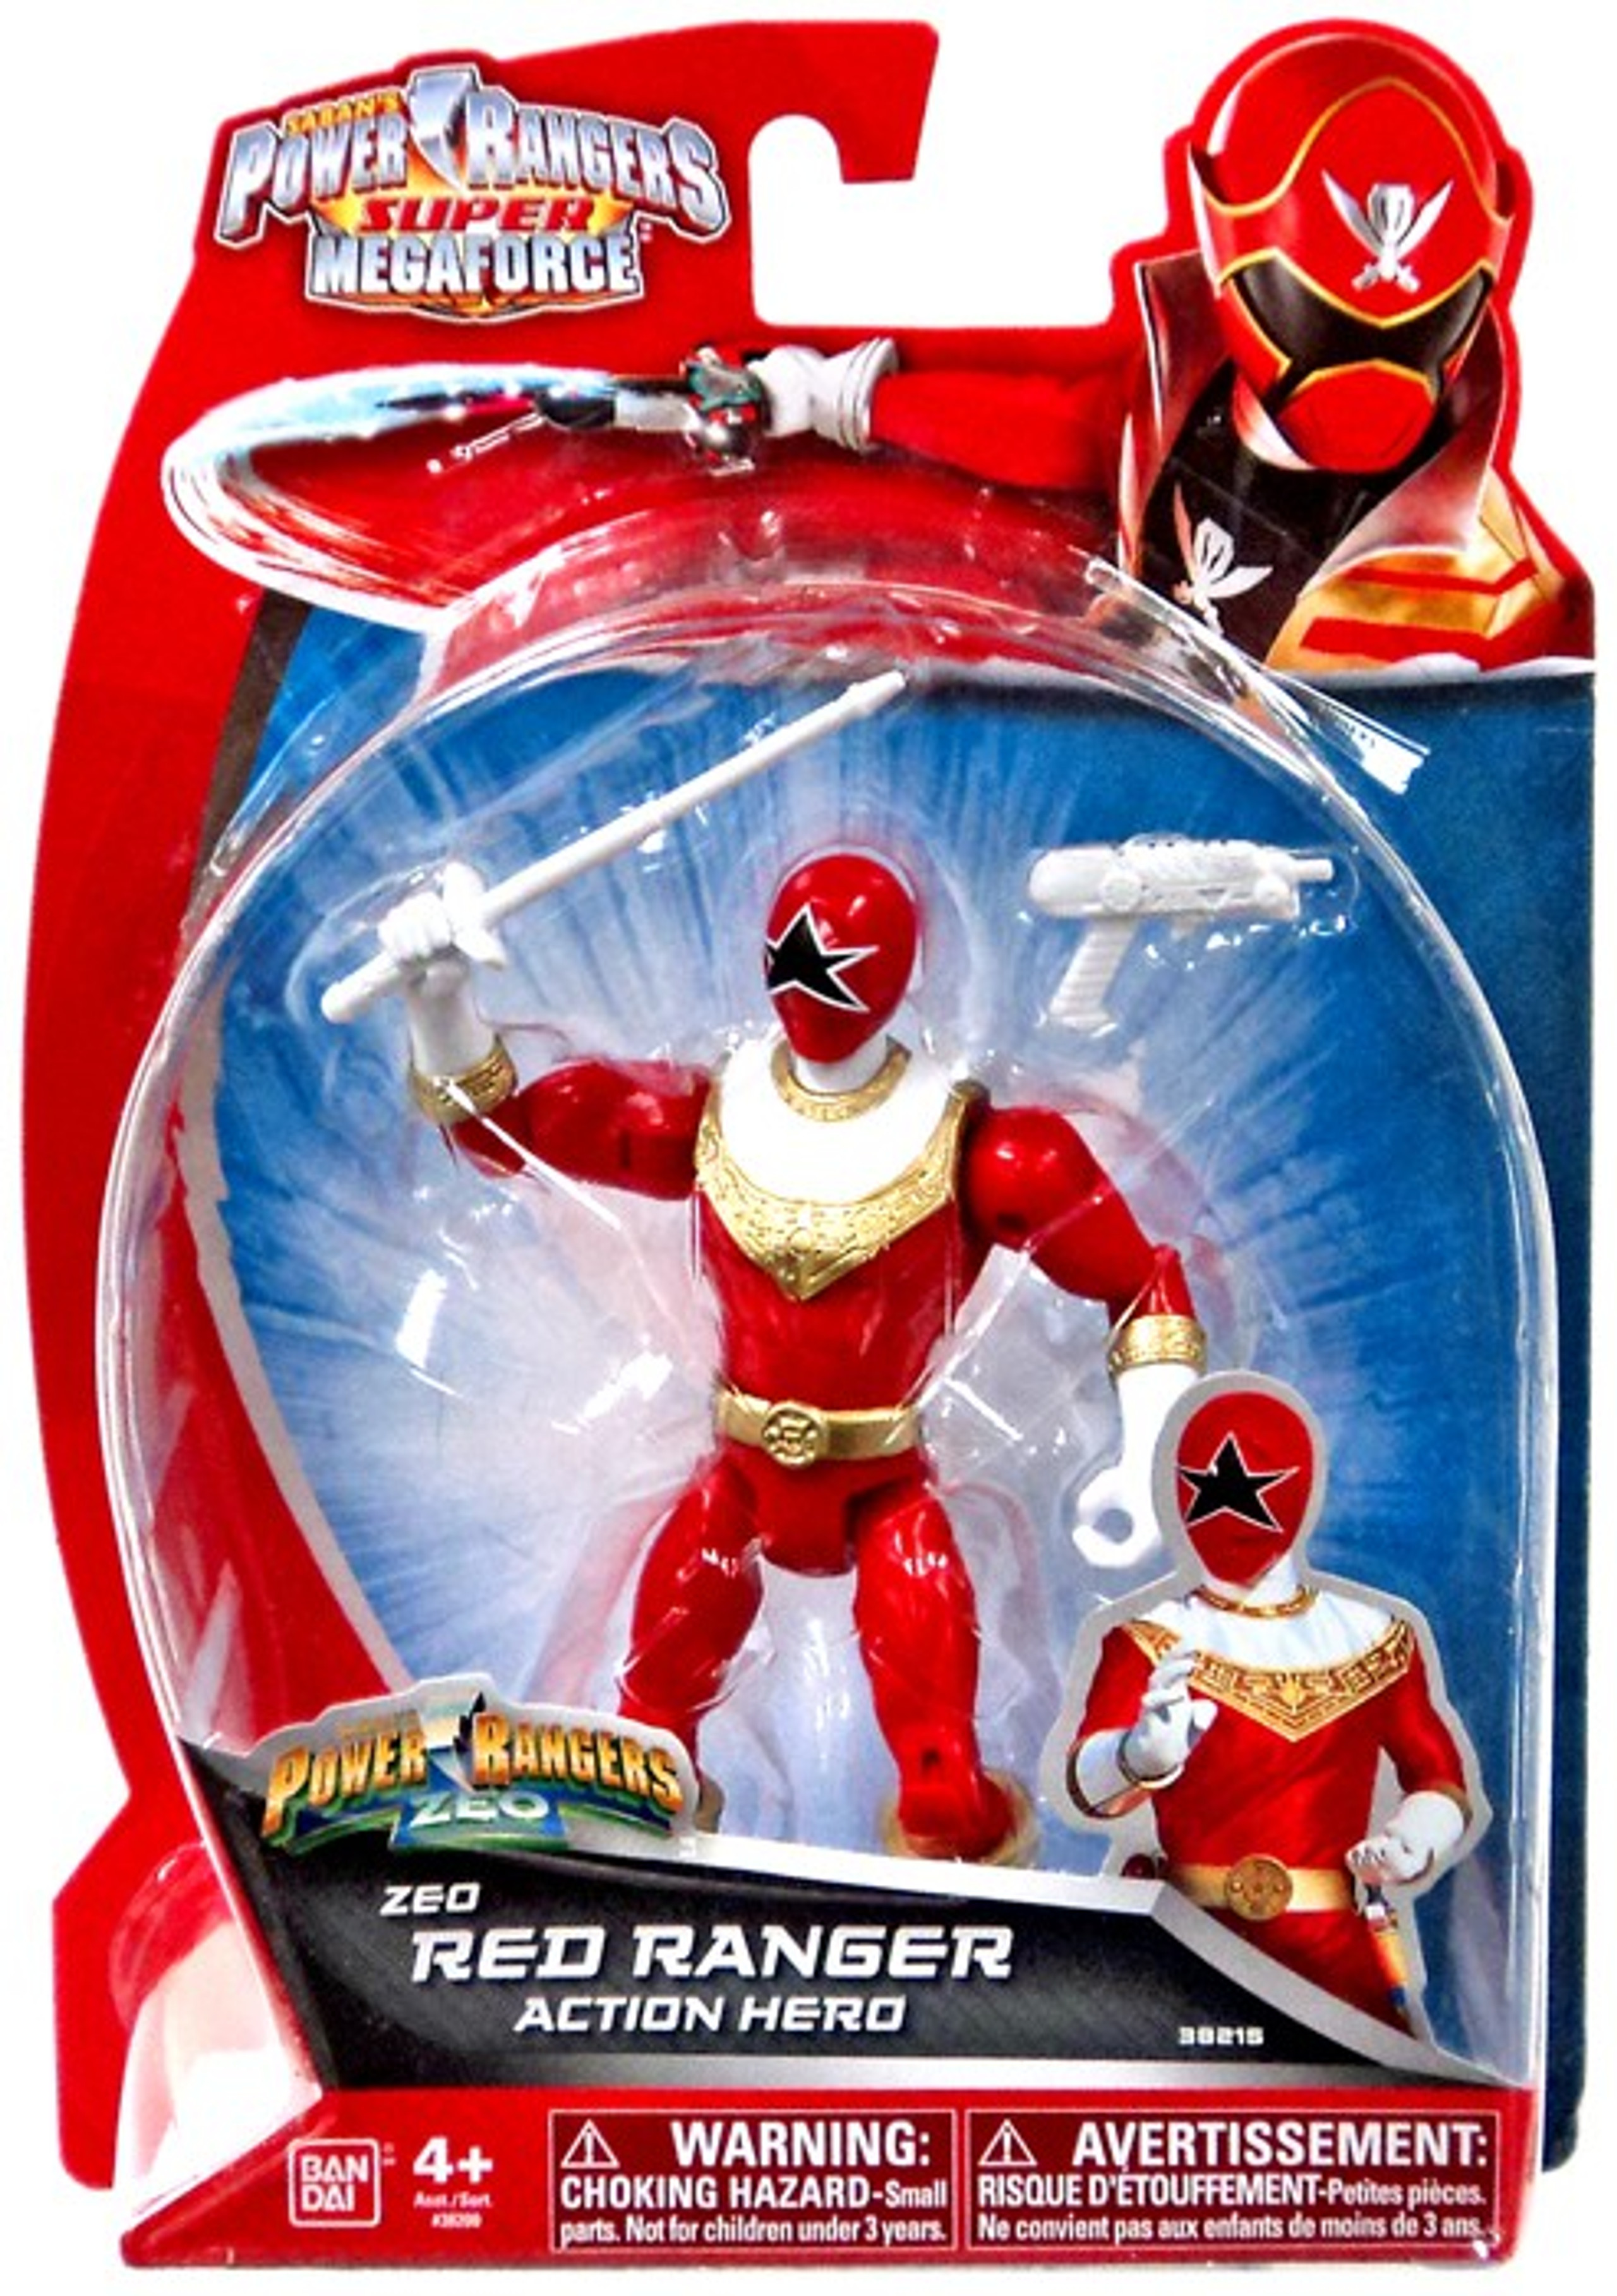 Power Rangers Super Megaforce ZEO Red Ranger Action Hero Action Figure ... - Apivsupbq  54435.1516122796